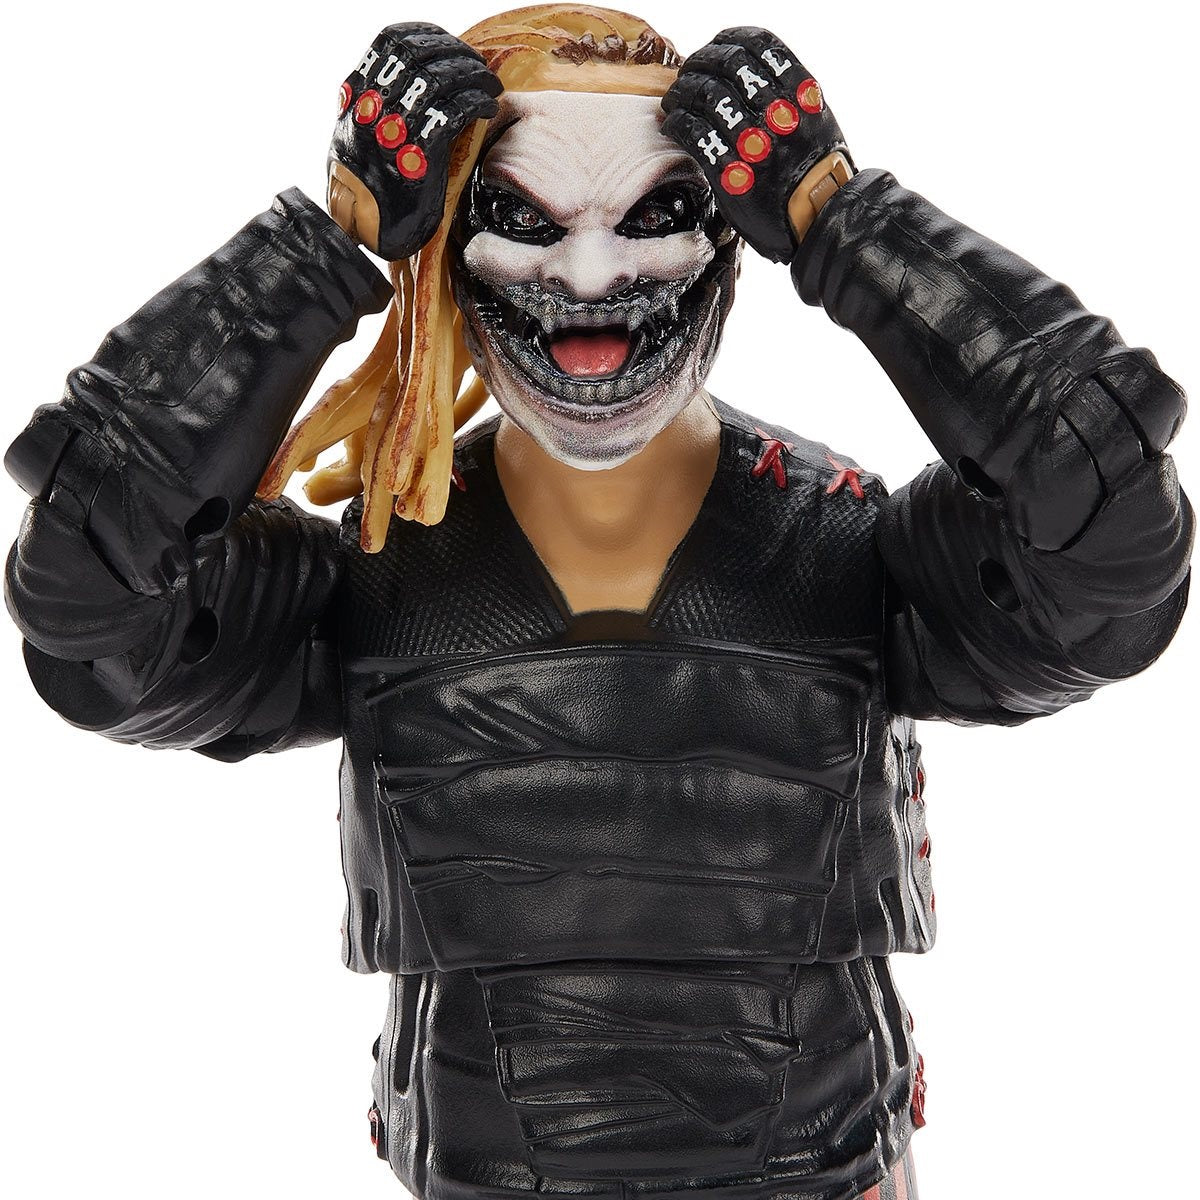 2022 WWE Mattel Ultimate Edition Series 12 "The Fiend" Bray Wyatt